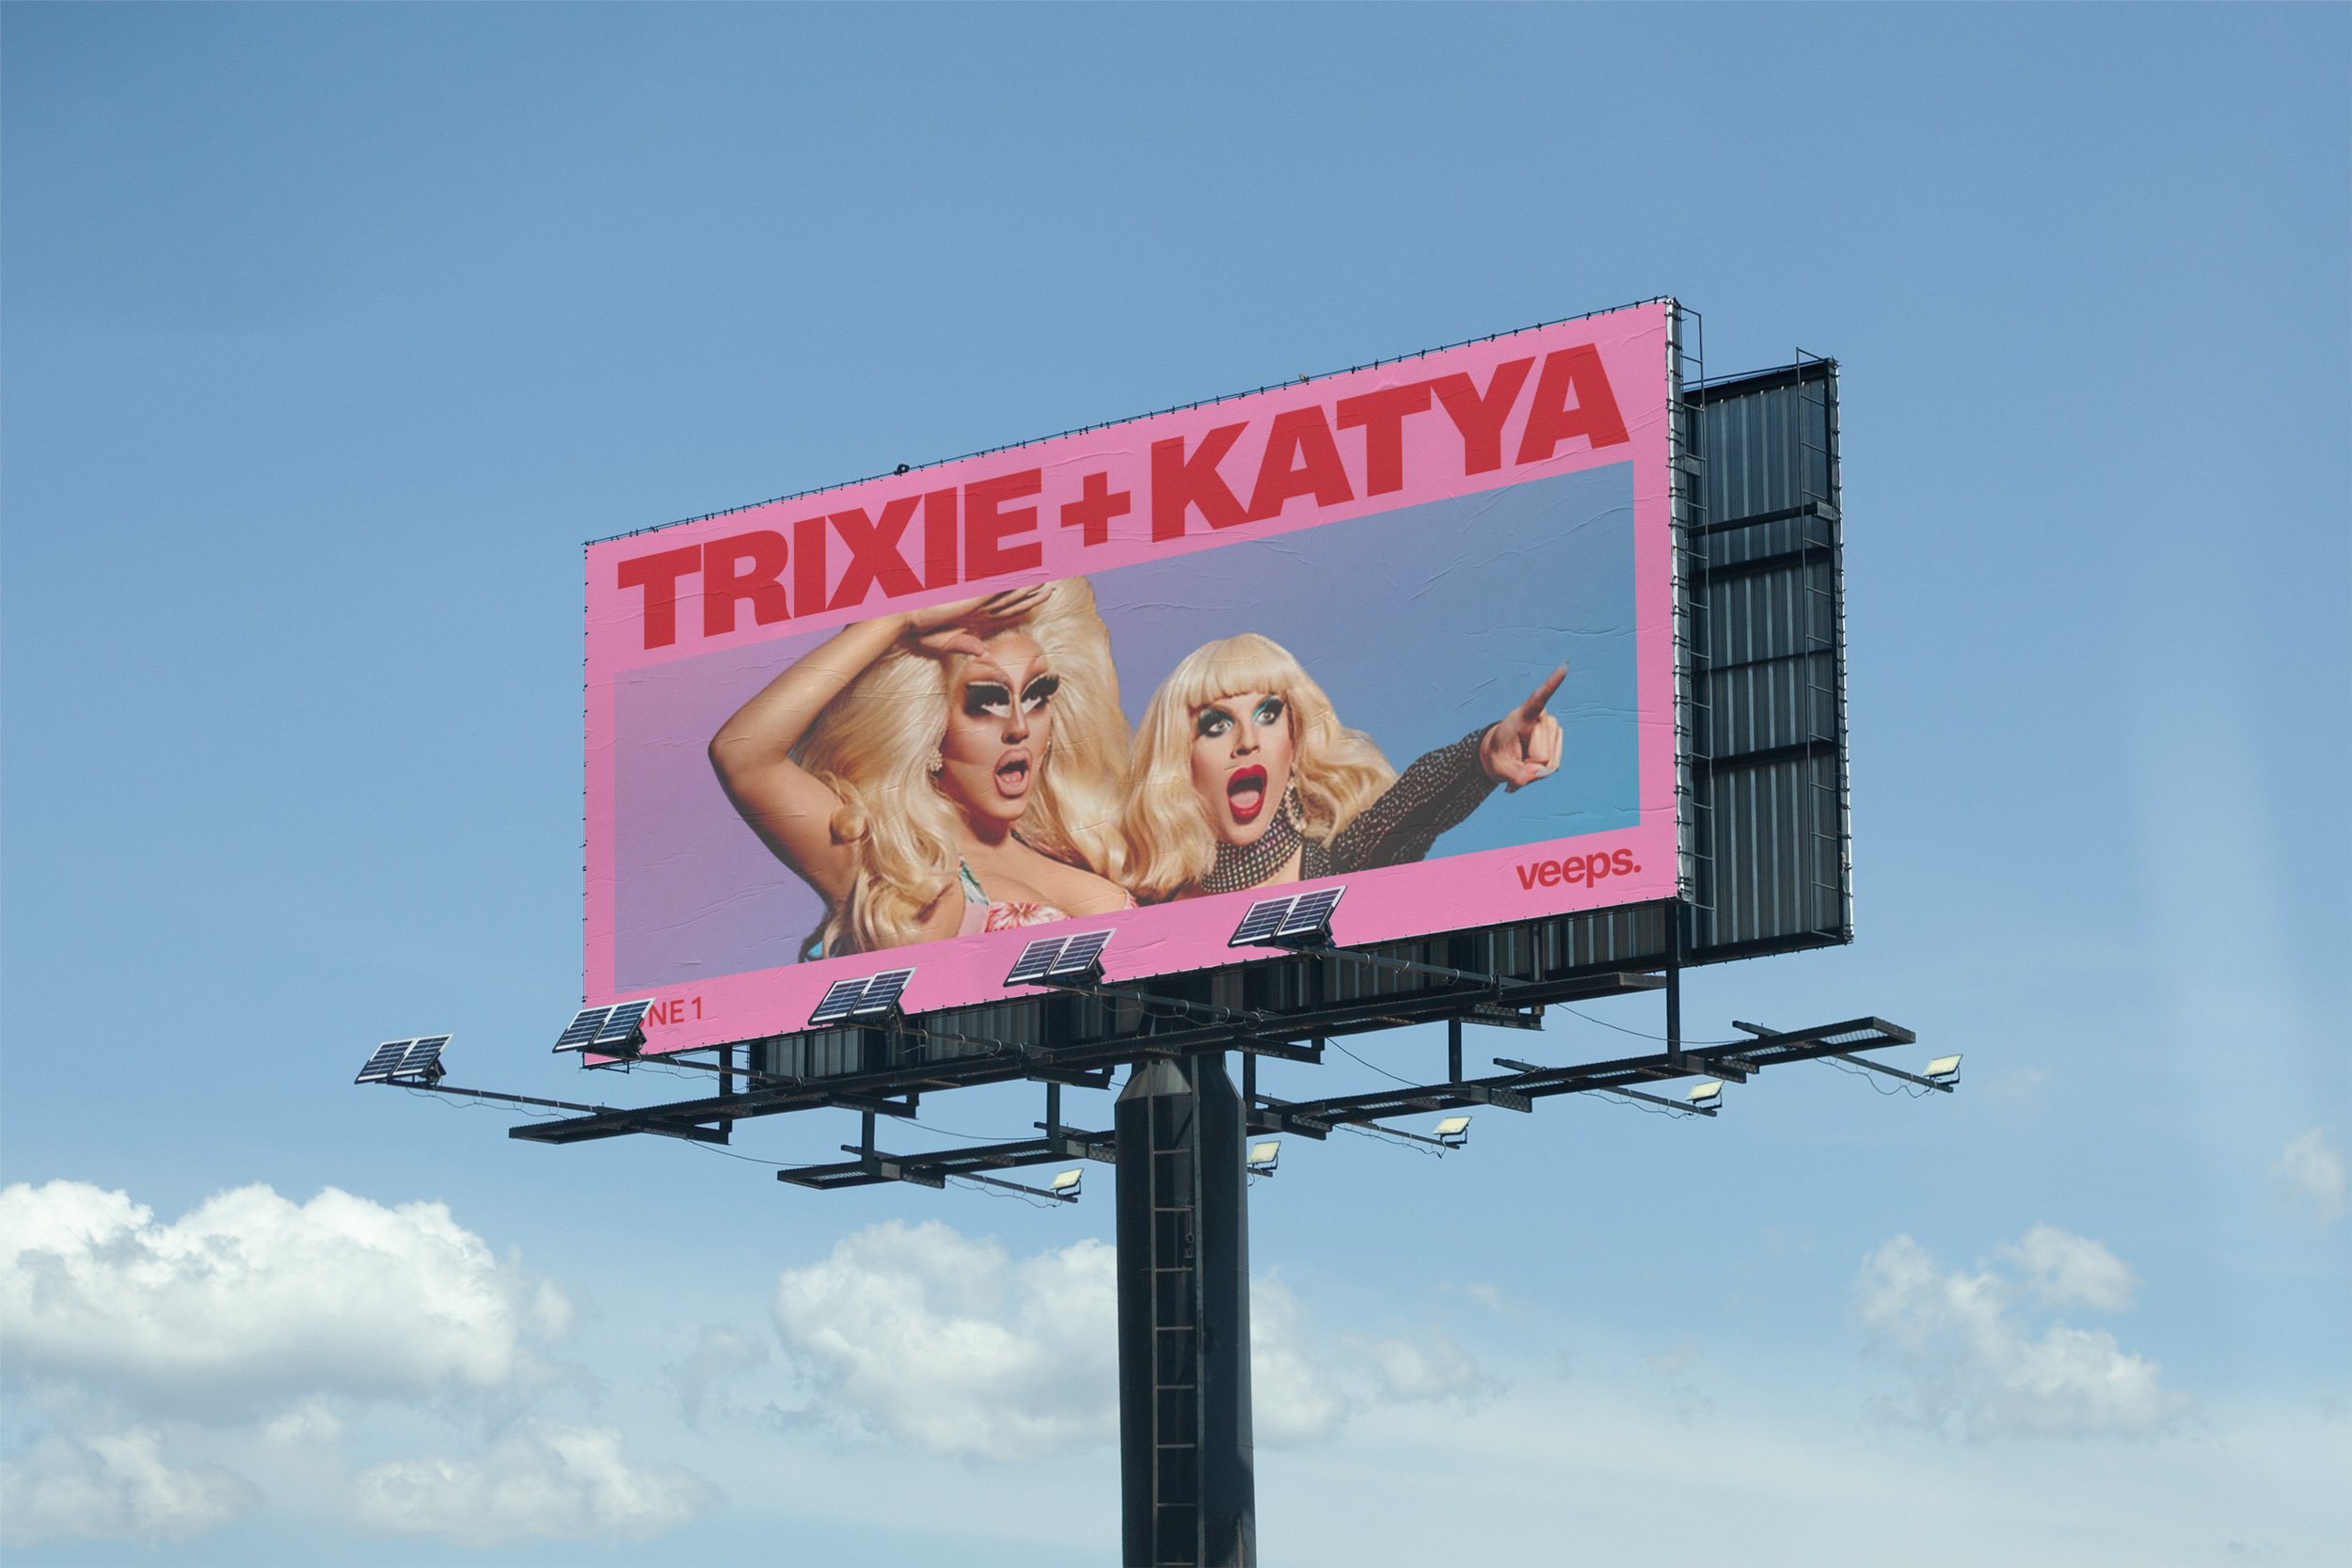 Trixie-Katya-Billboard-001.jpg